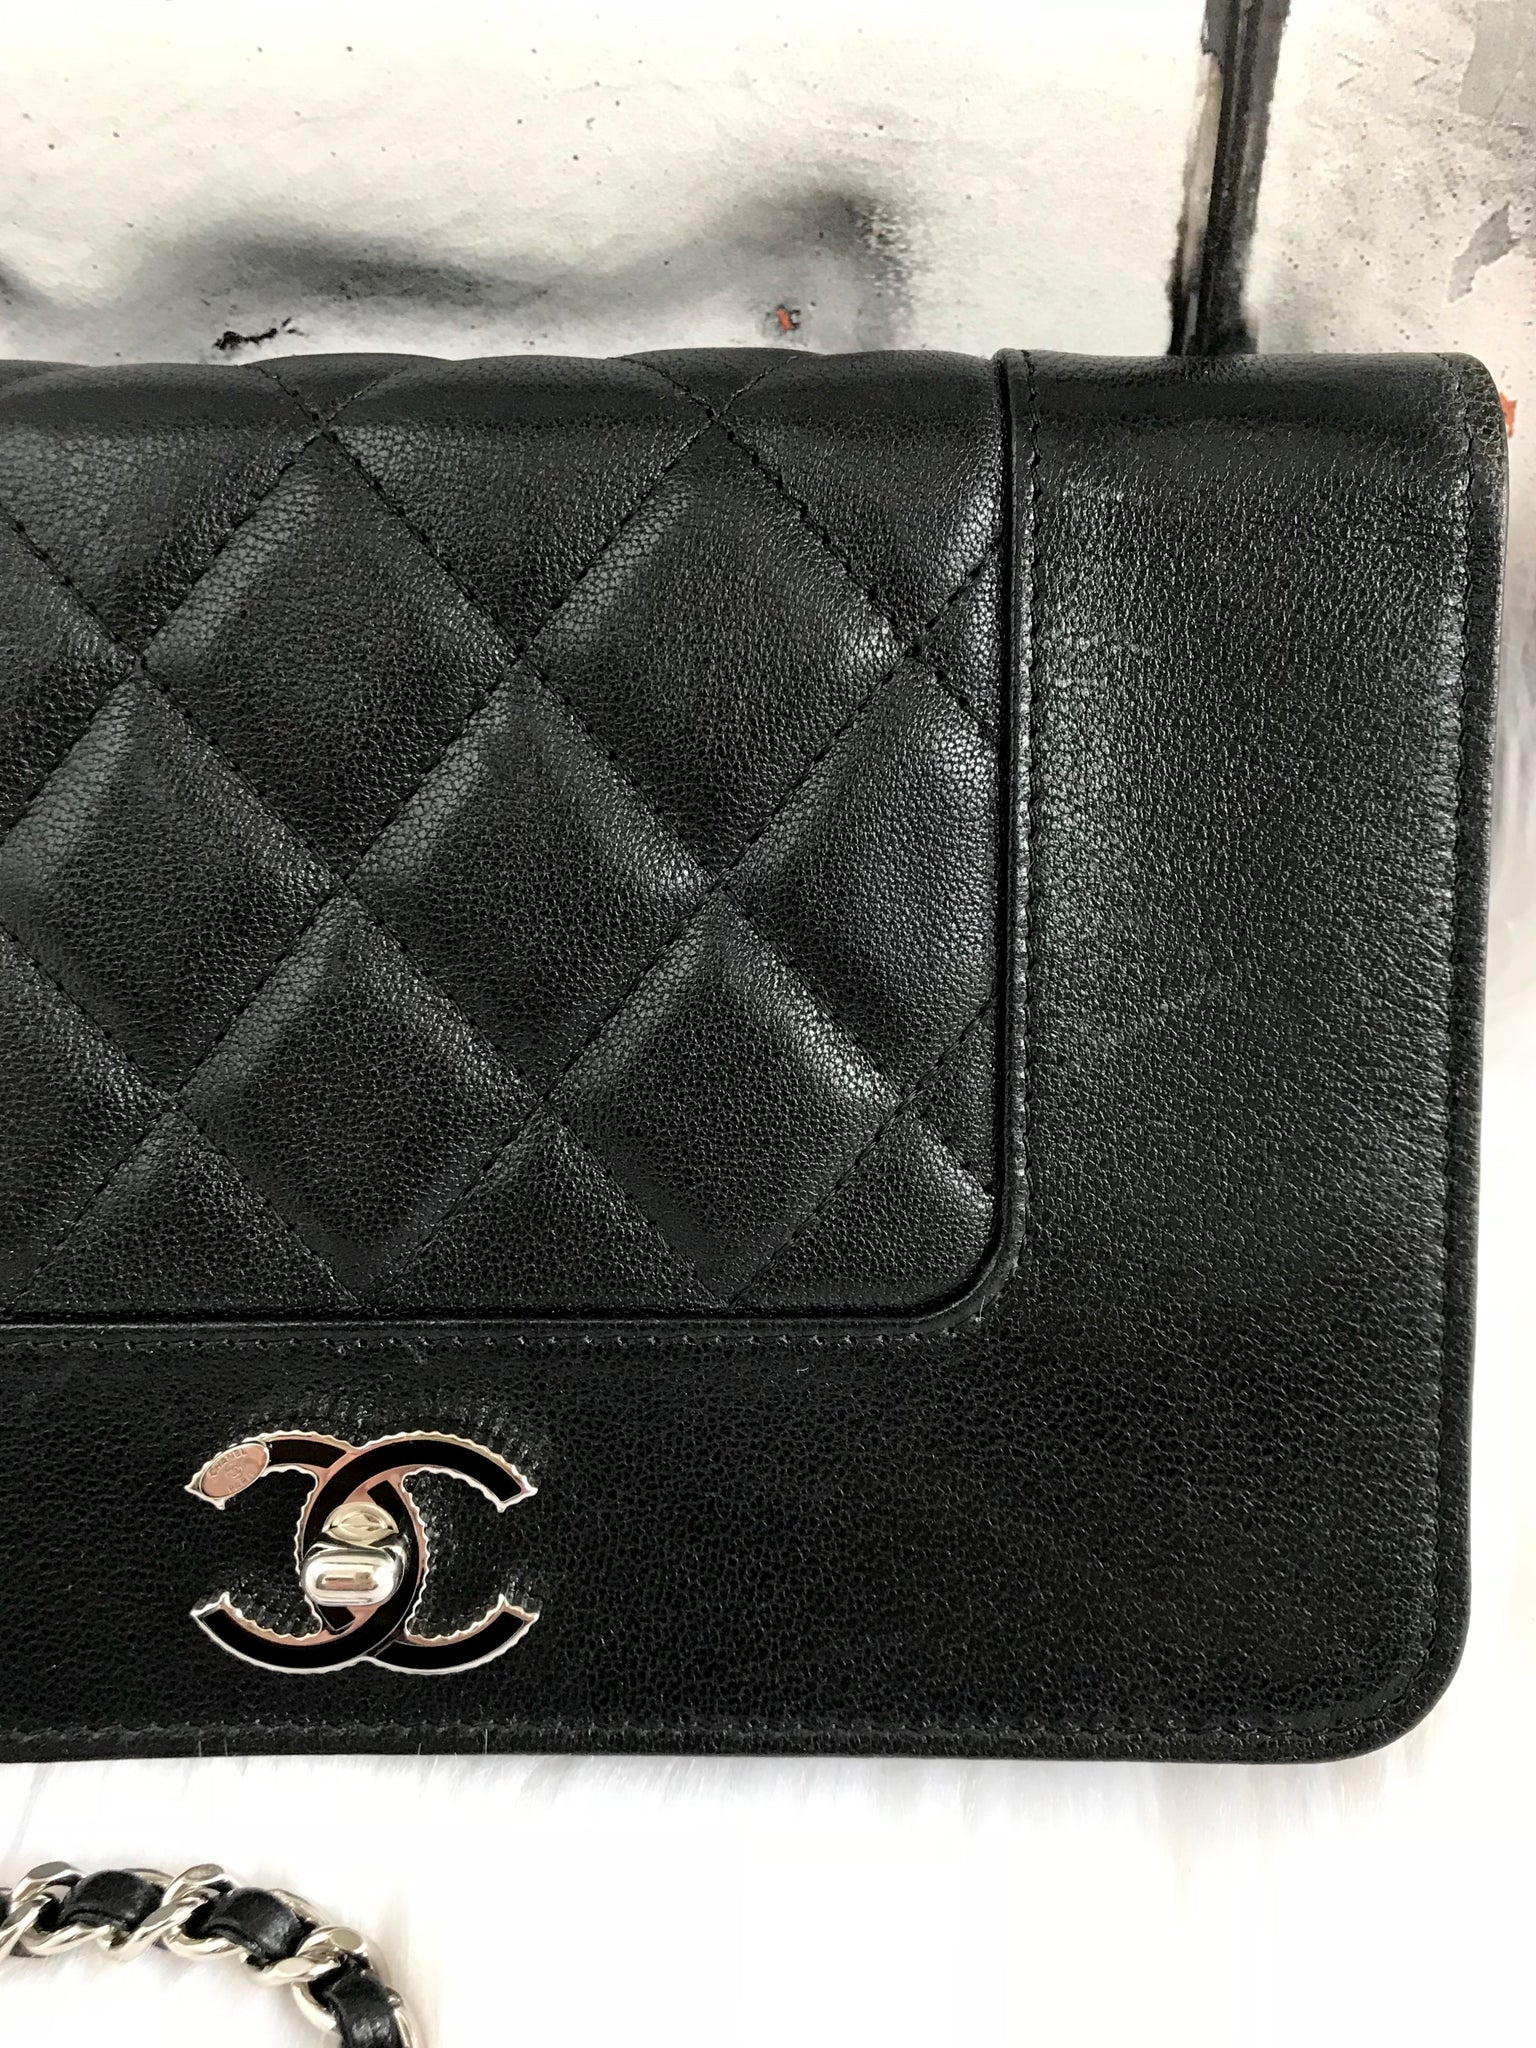 Chanel Paris in Rome Zipped Wallet